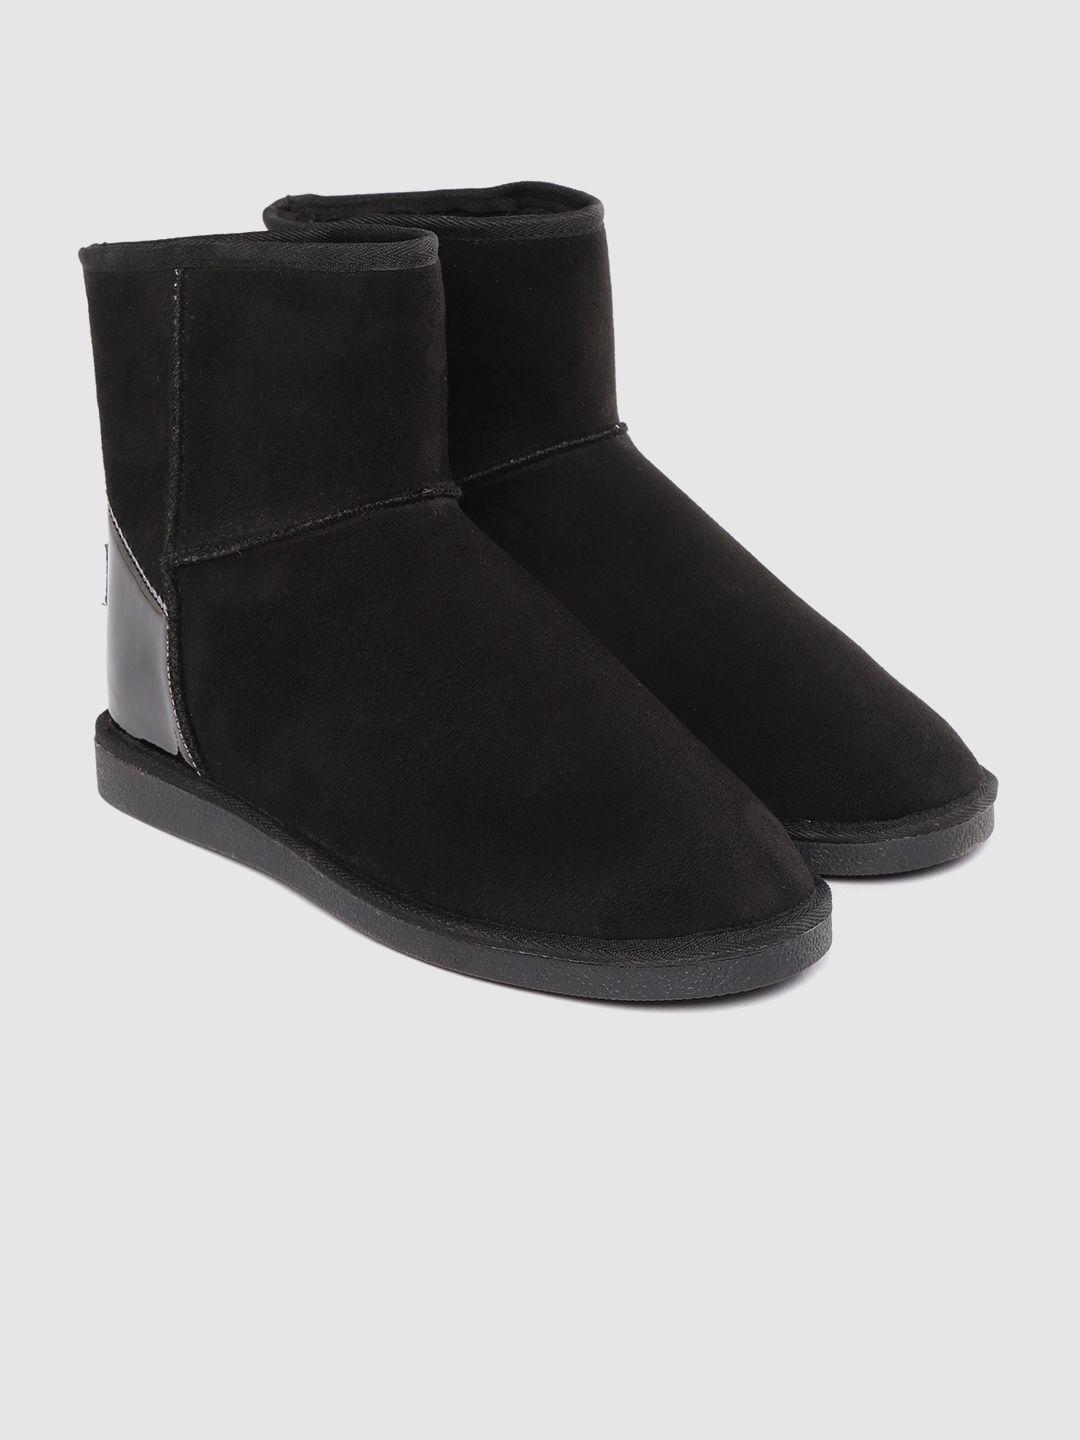 carlton london women black solid mid-top snug boots